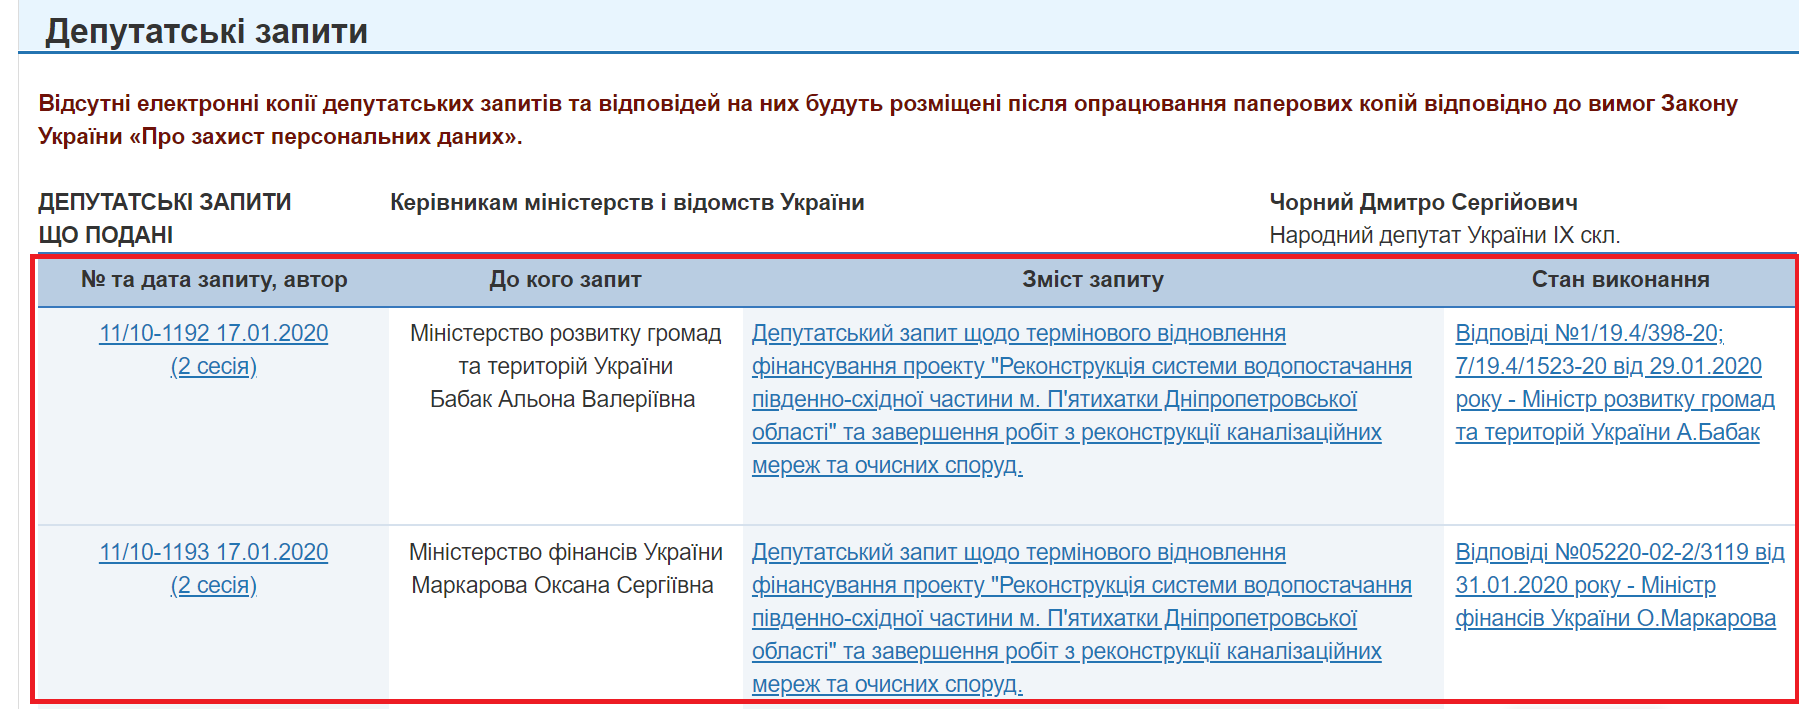 http://w1.c1.rada.gov.ua/pls/zweb2/wcadr43D?sklikannja=10&kodtip=6&rejim=1&KOD8011=21072